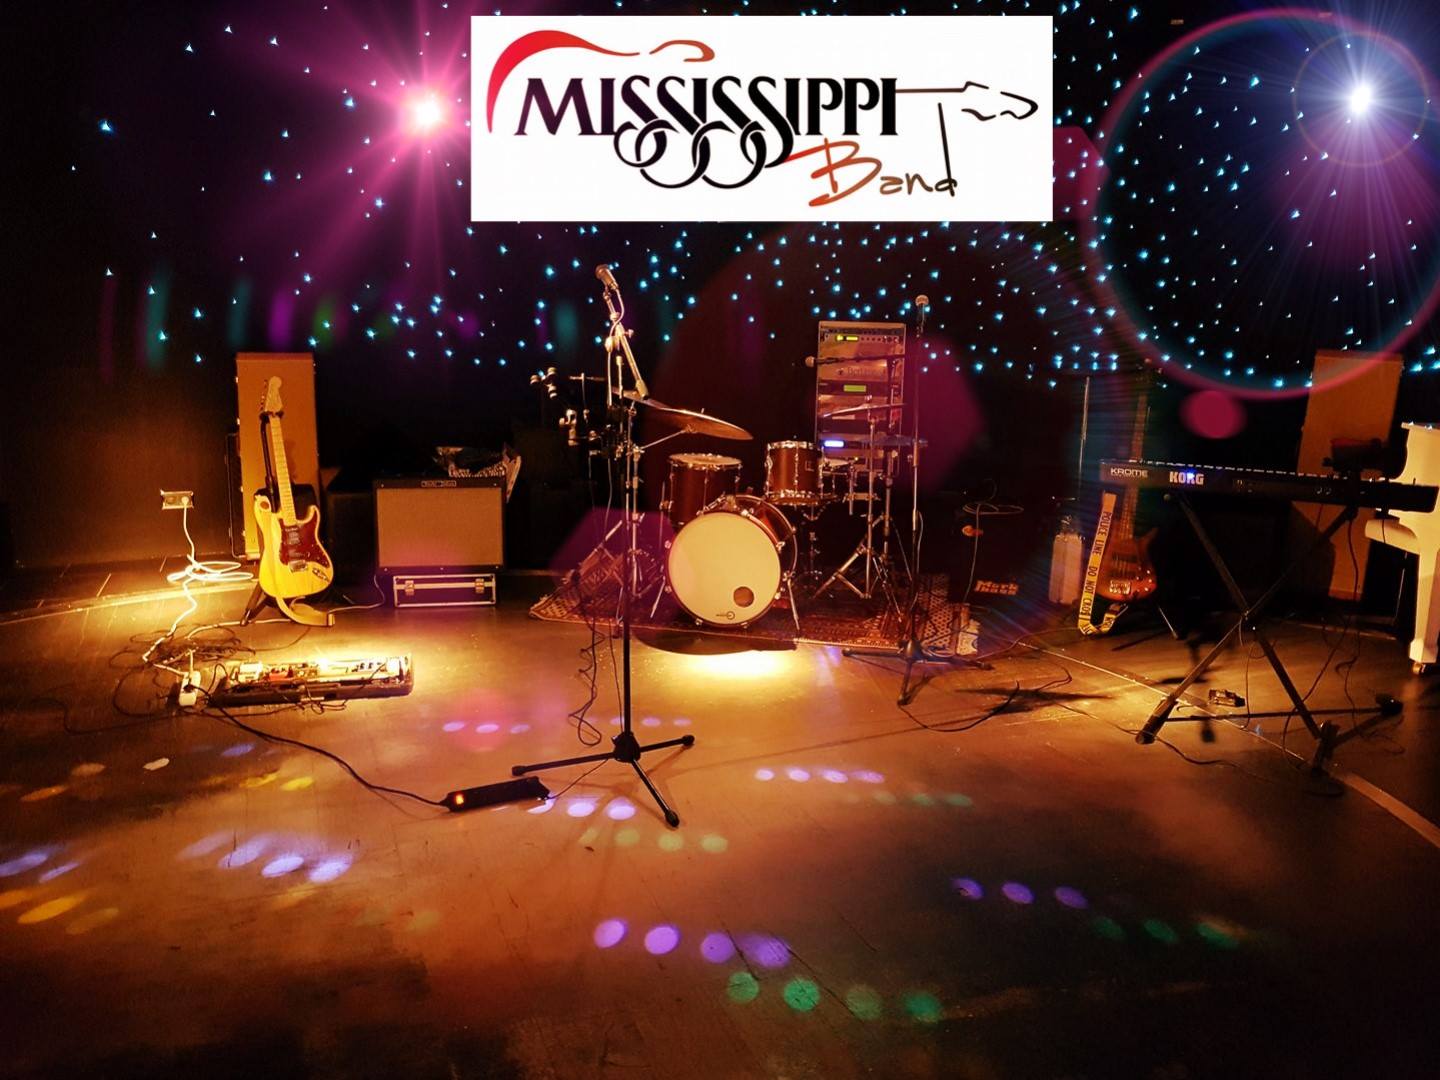 Mississipi Band